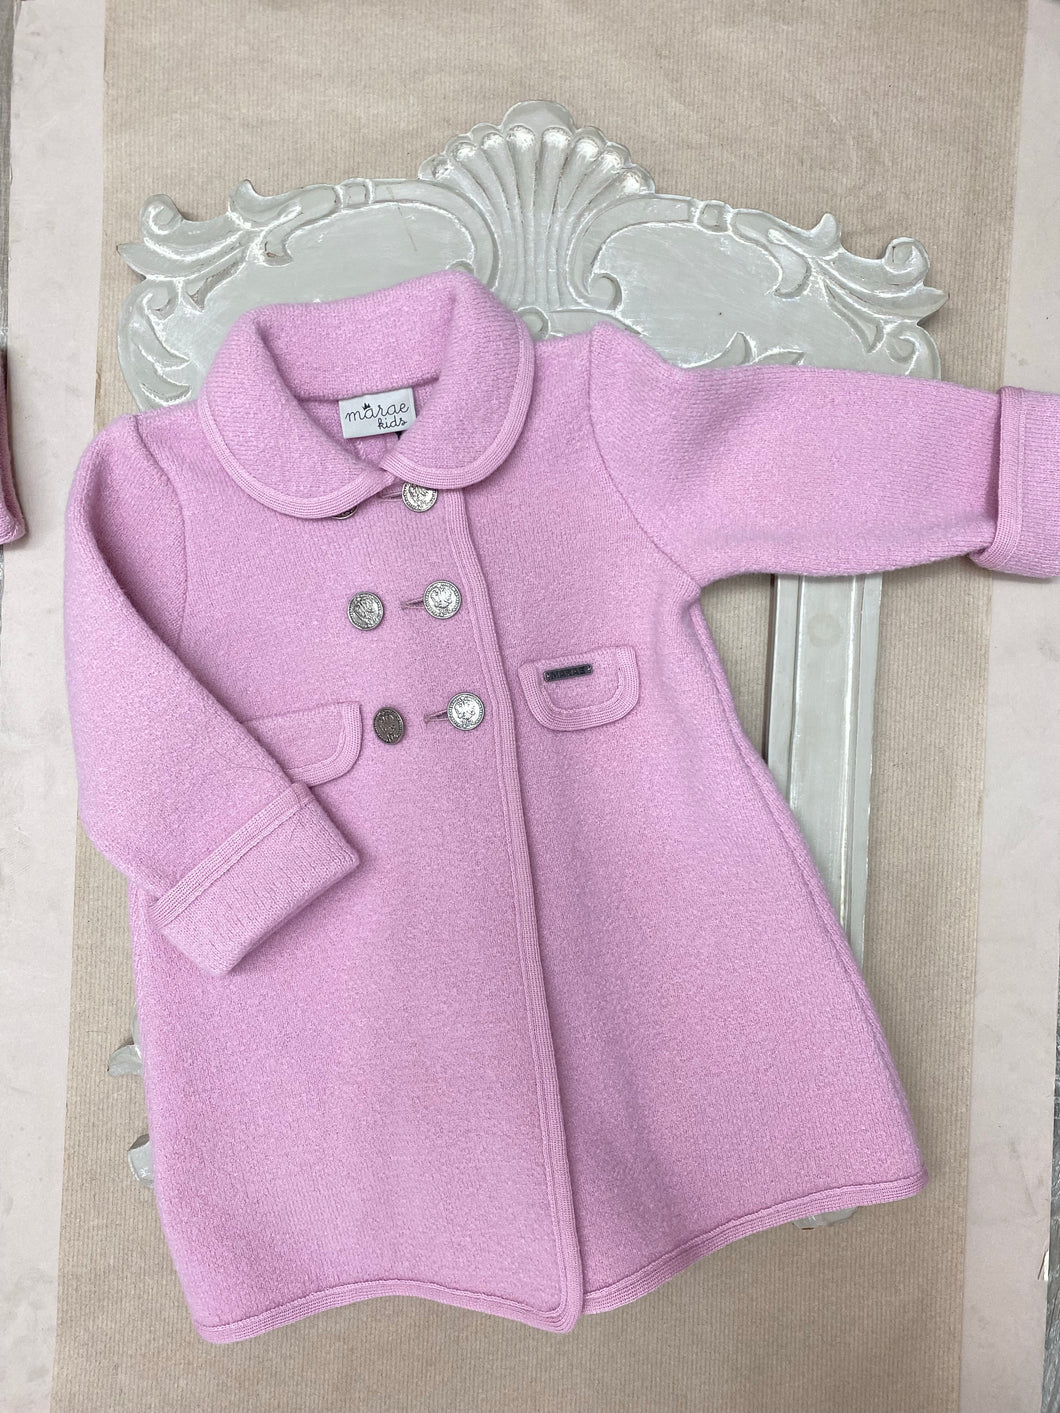 Marae pale pink coat